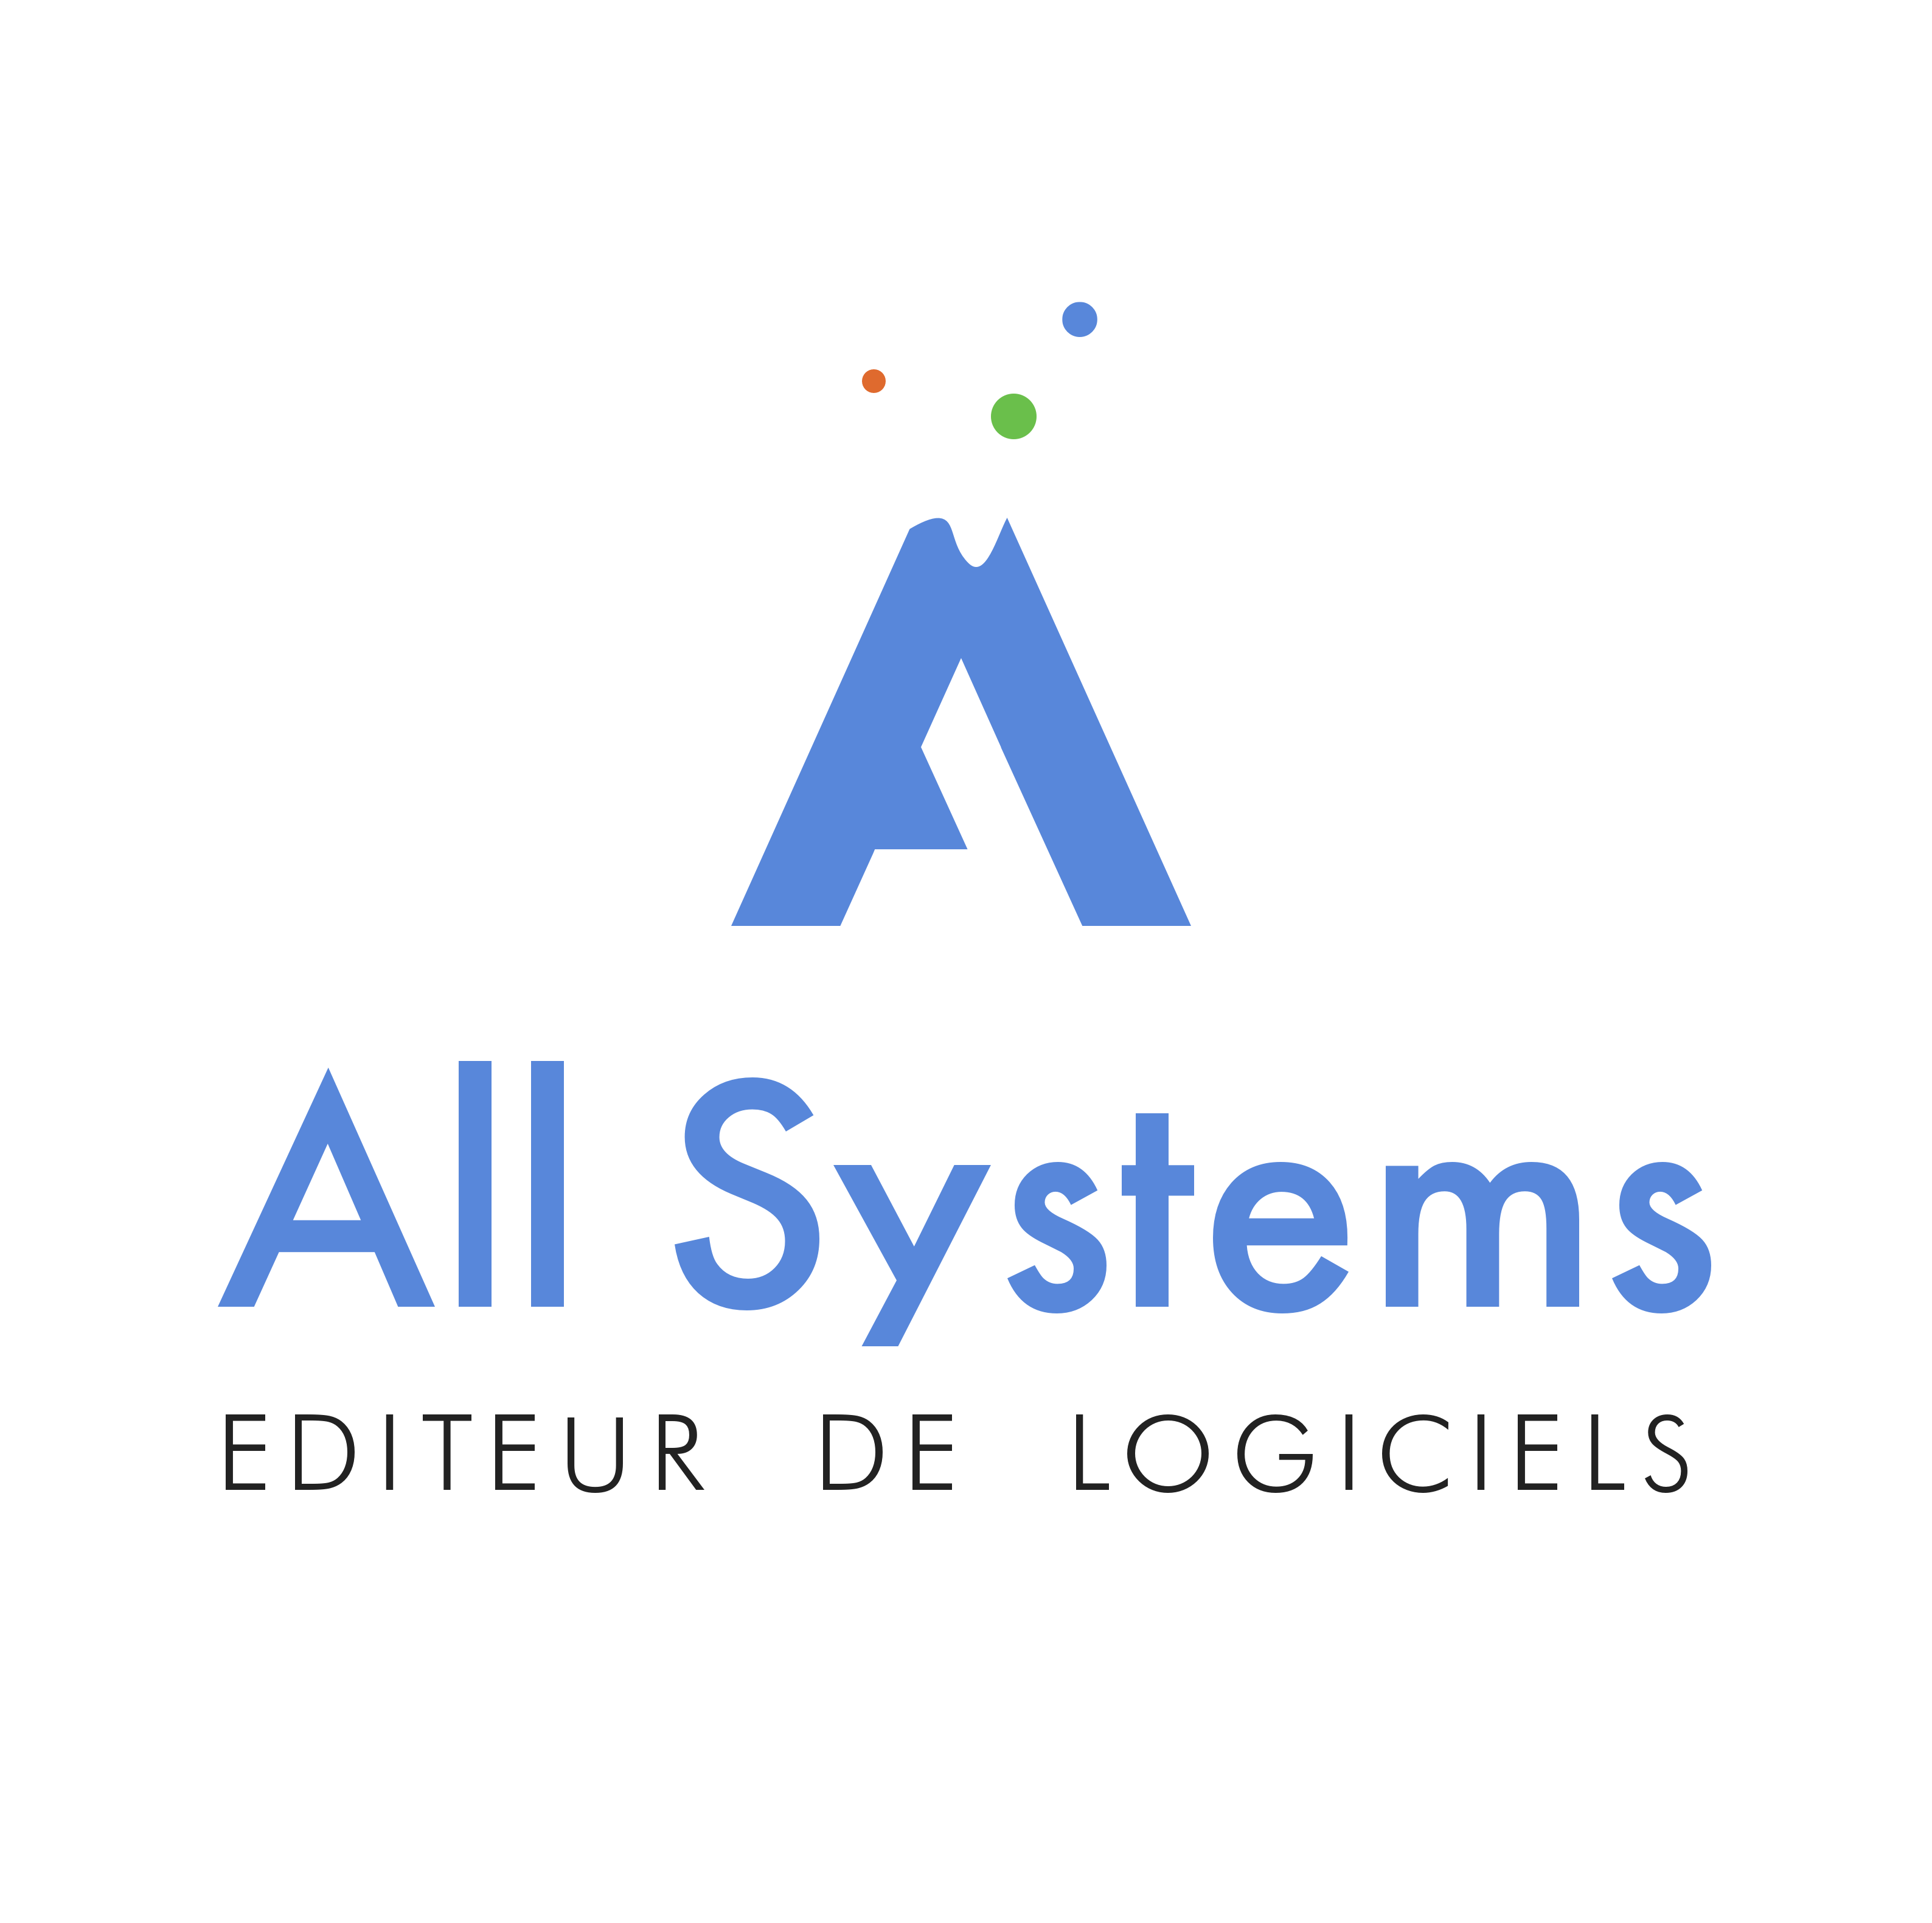 allsystemslogo